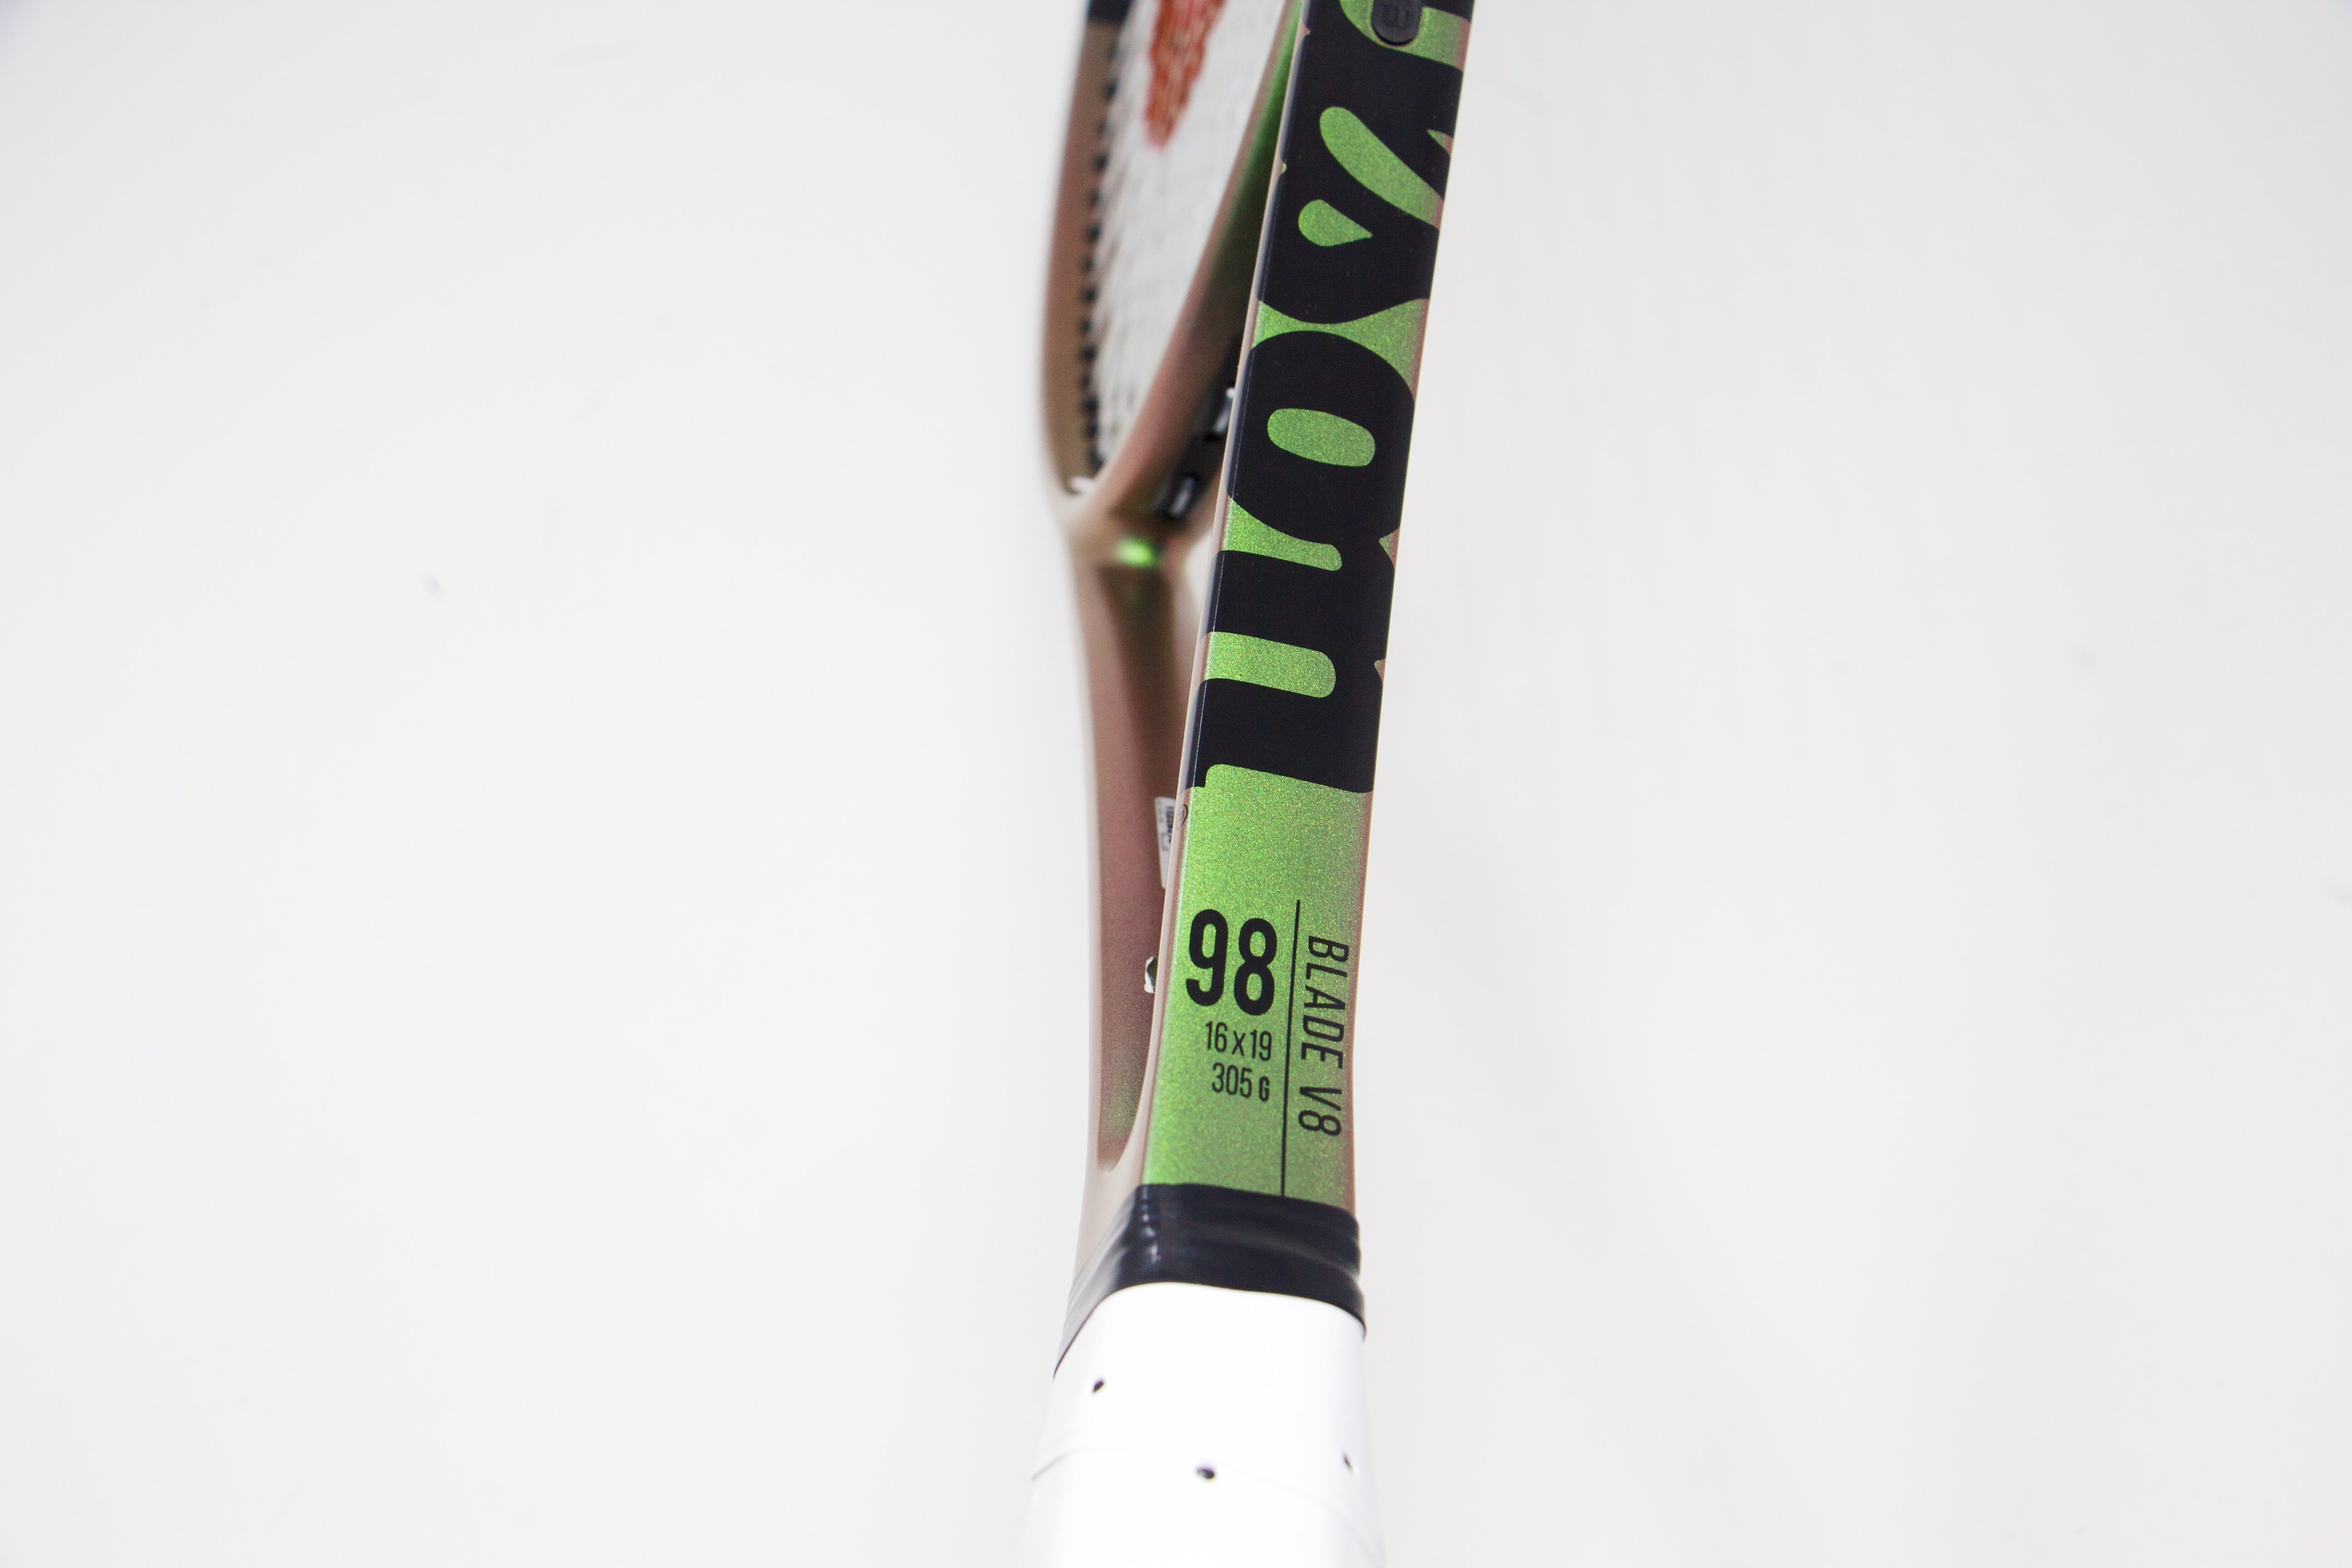 Wilson Blade 98 16x19 V8 Refurbished Tennis Racket